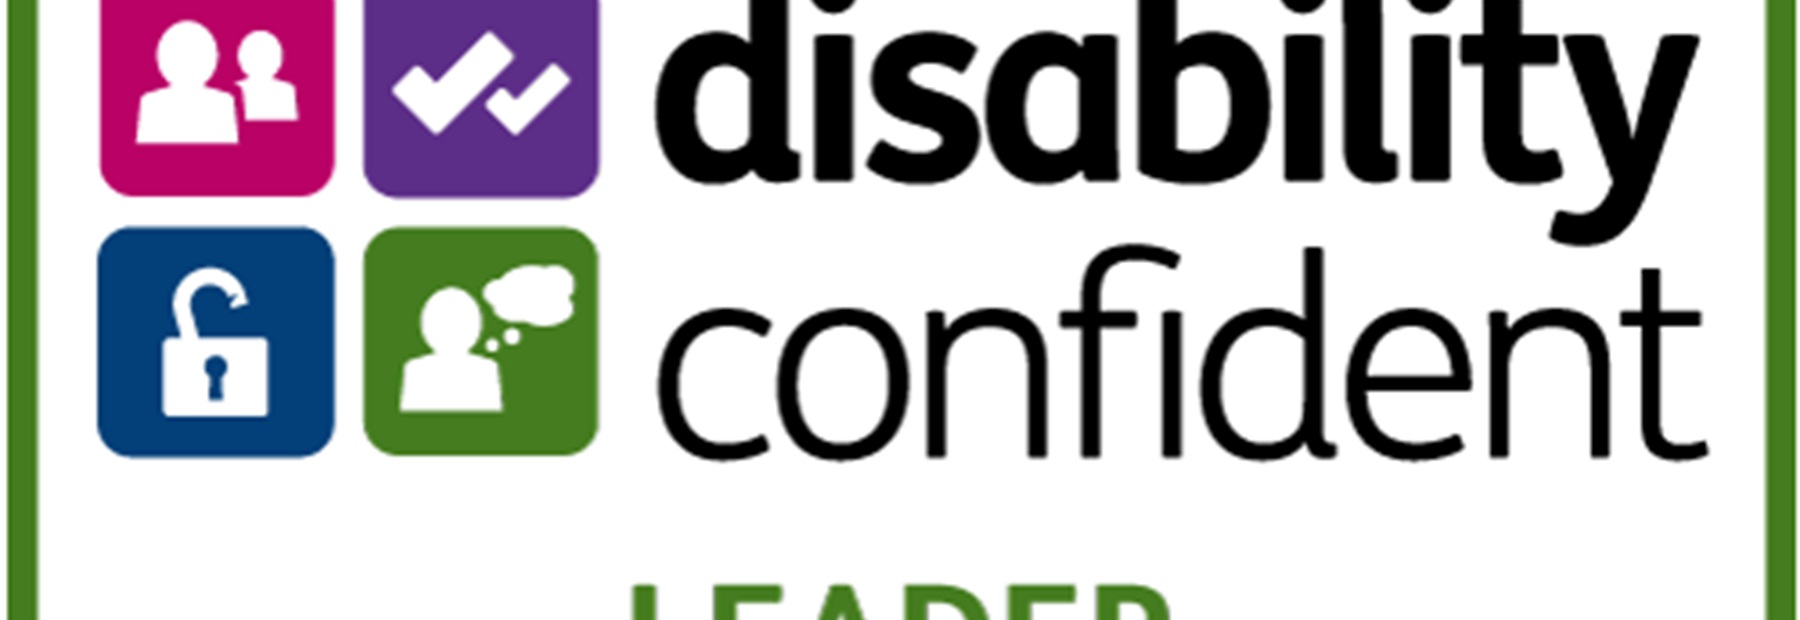 Disability confident leader